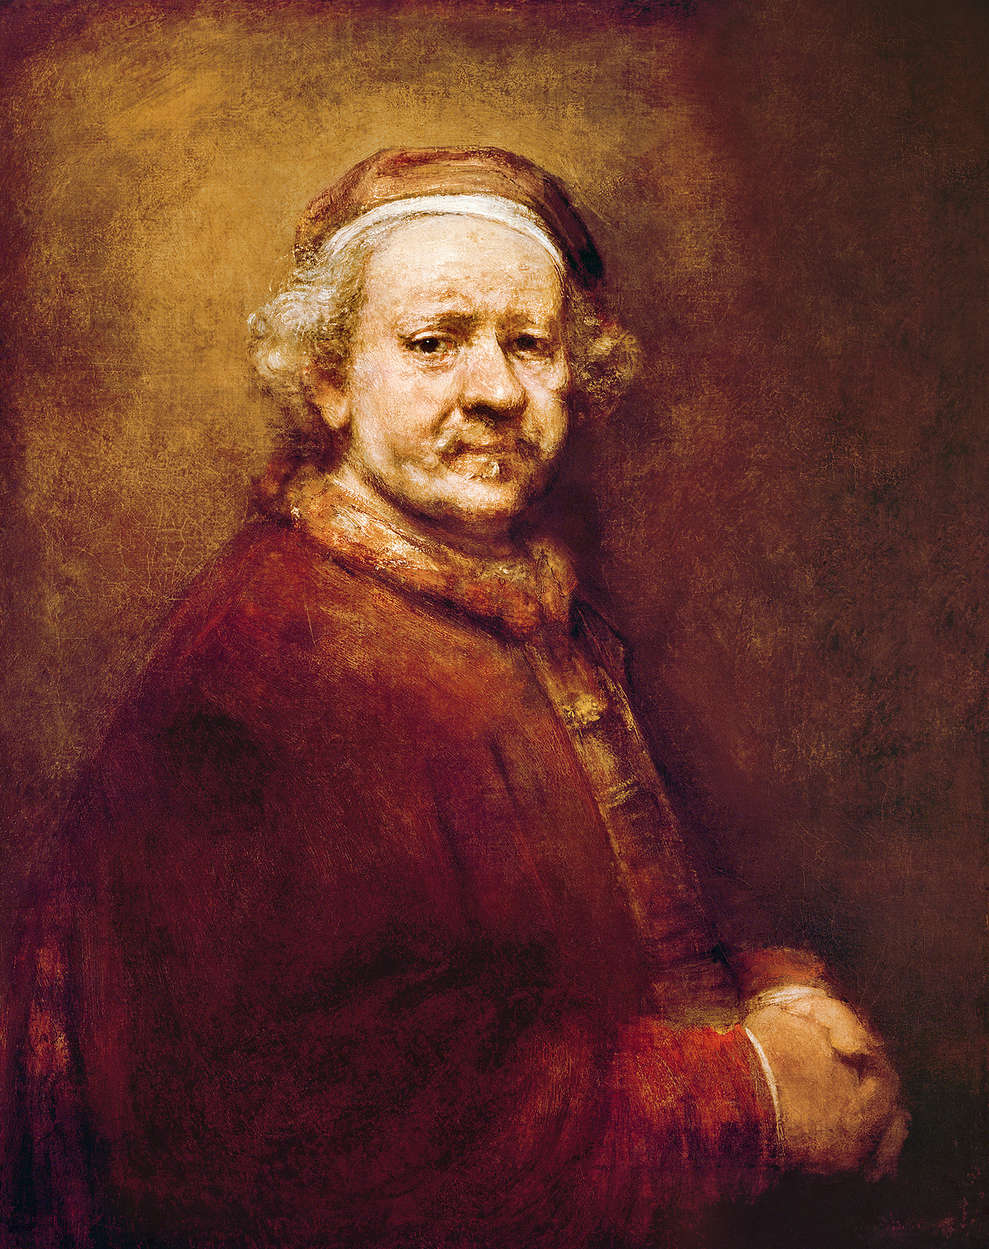             Mural "Autorretrato" de Rembrandt van Rijn
        